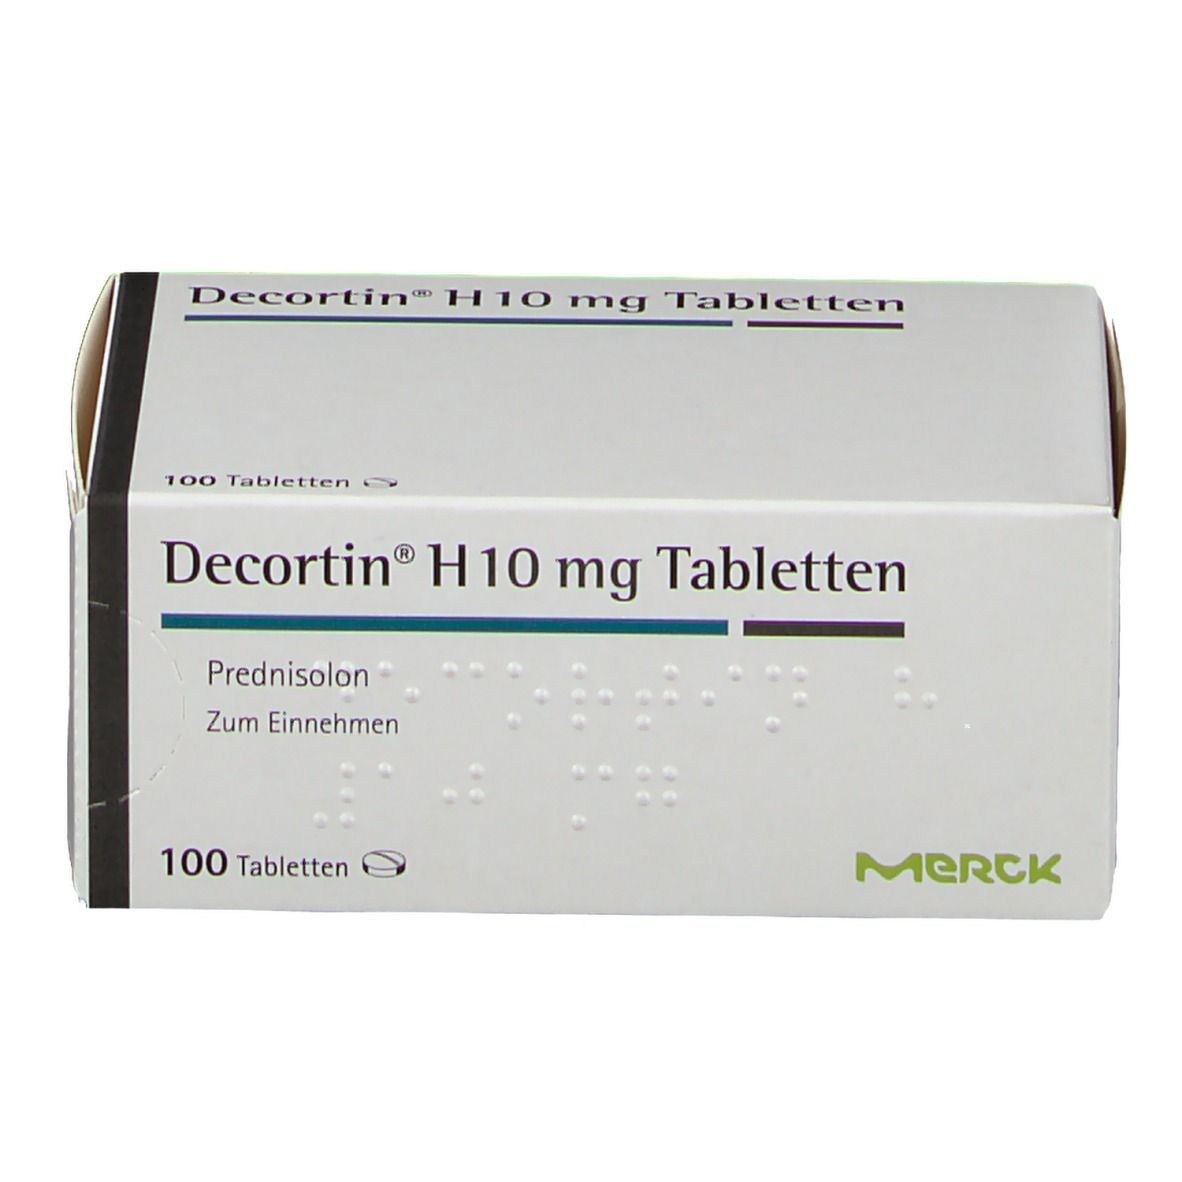 Decortin® H 10 mg